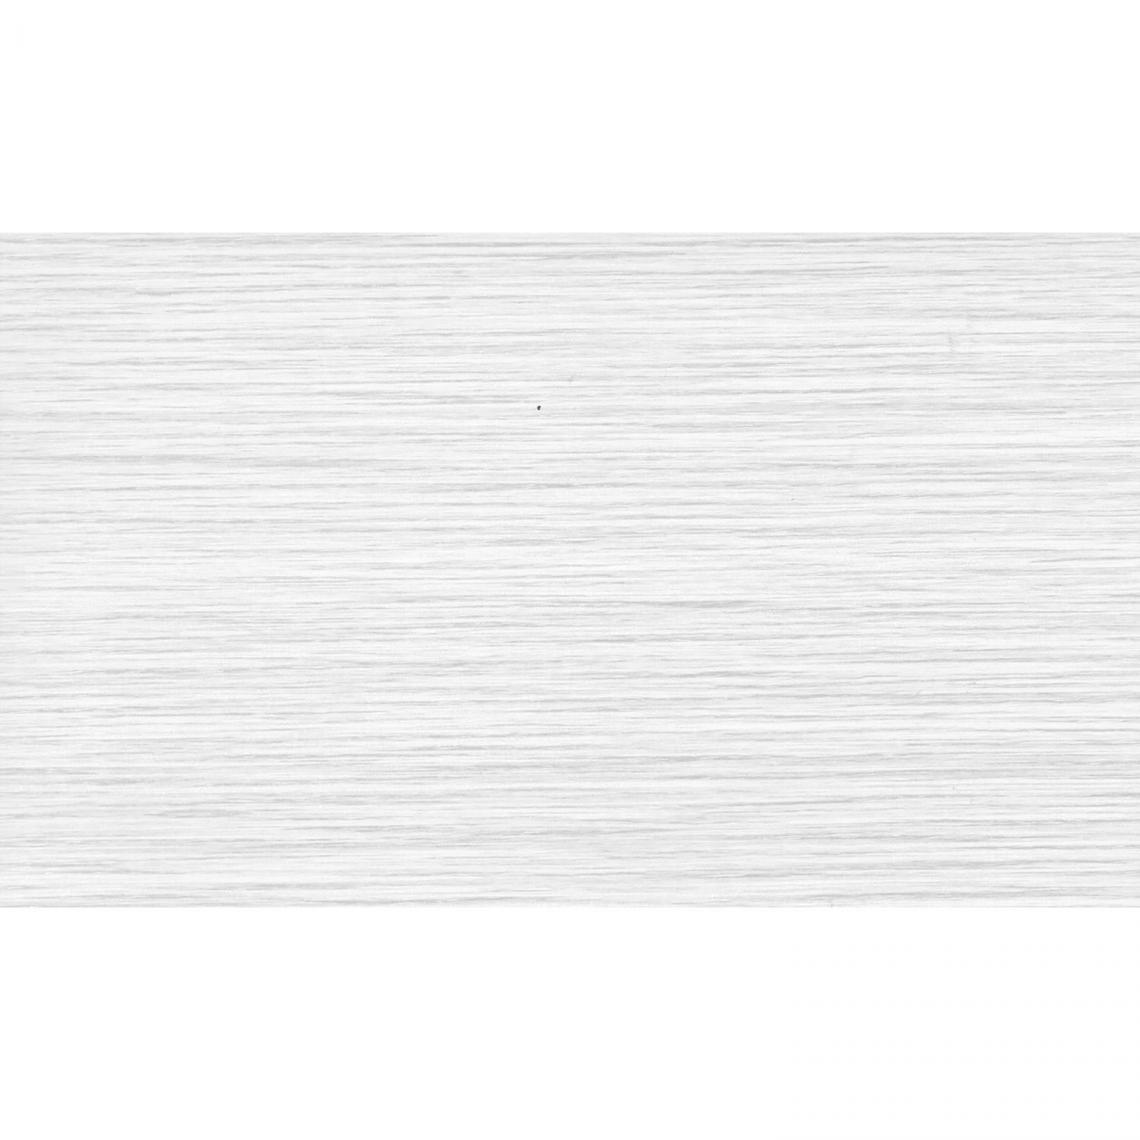 Cpm - Lot 2x Adhésif décoratif Chêne blanchi - 200 x 67,5 cm - Blanc - Papier peint